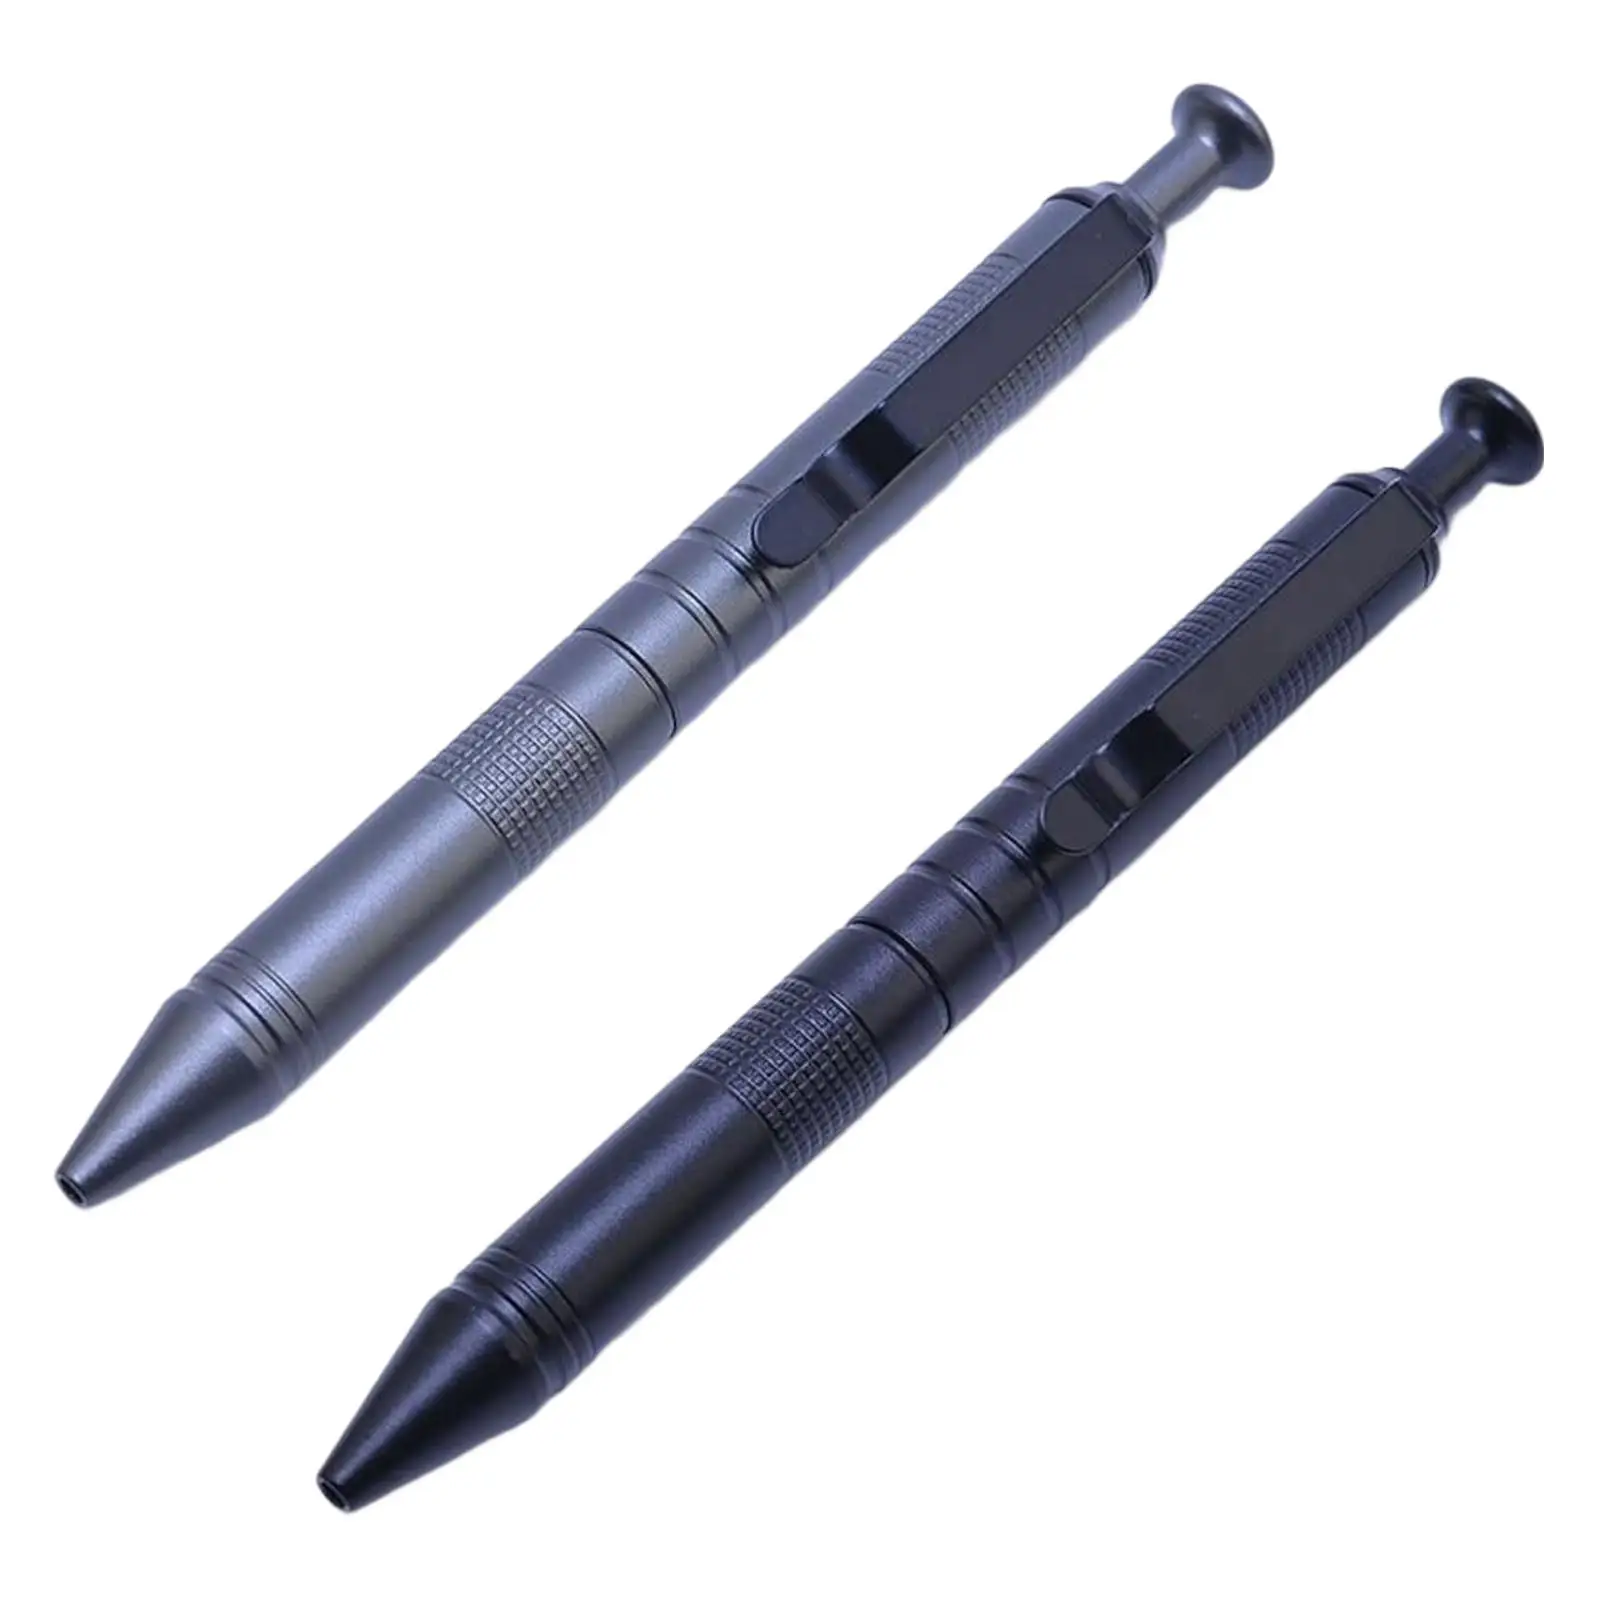 Signatures Personal Pen Glass Breaker Tool Camping Gear ploy Multifunctional Pocket Survival Sturdy emergencies Ballpoint Pen